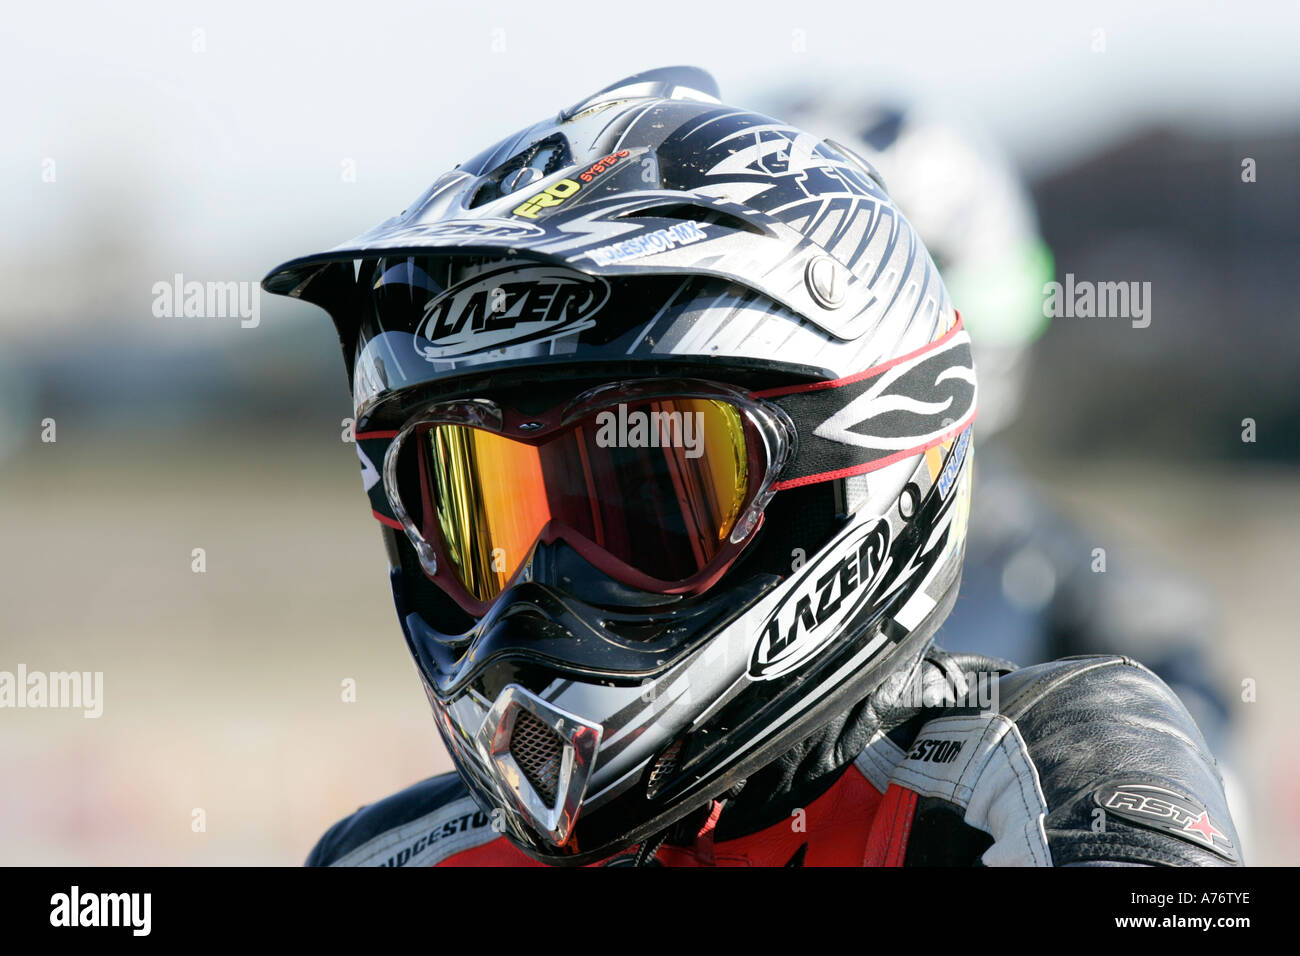 Motocross Rider In Helmet And Visor On The Grid Before Bike Race At Stock Photo Alamy